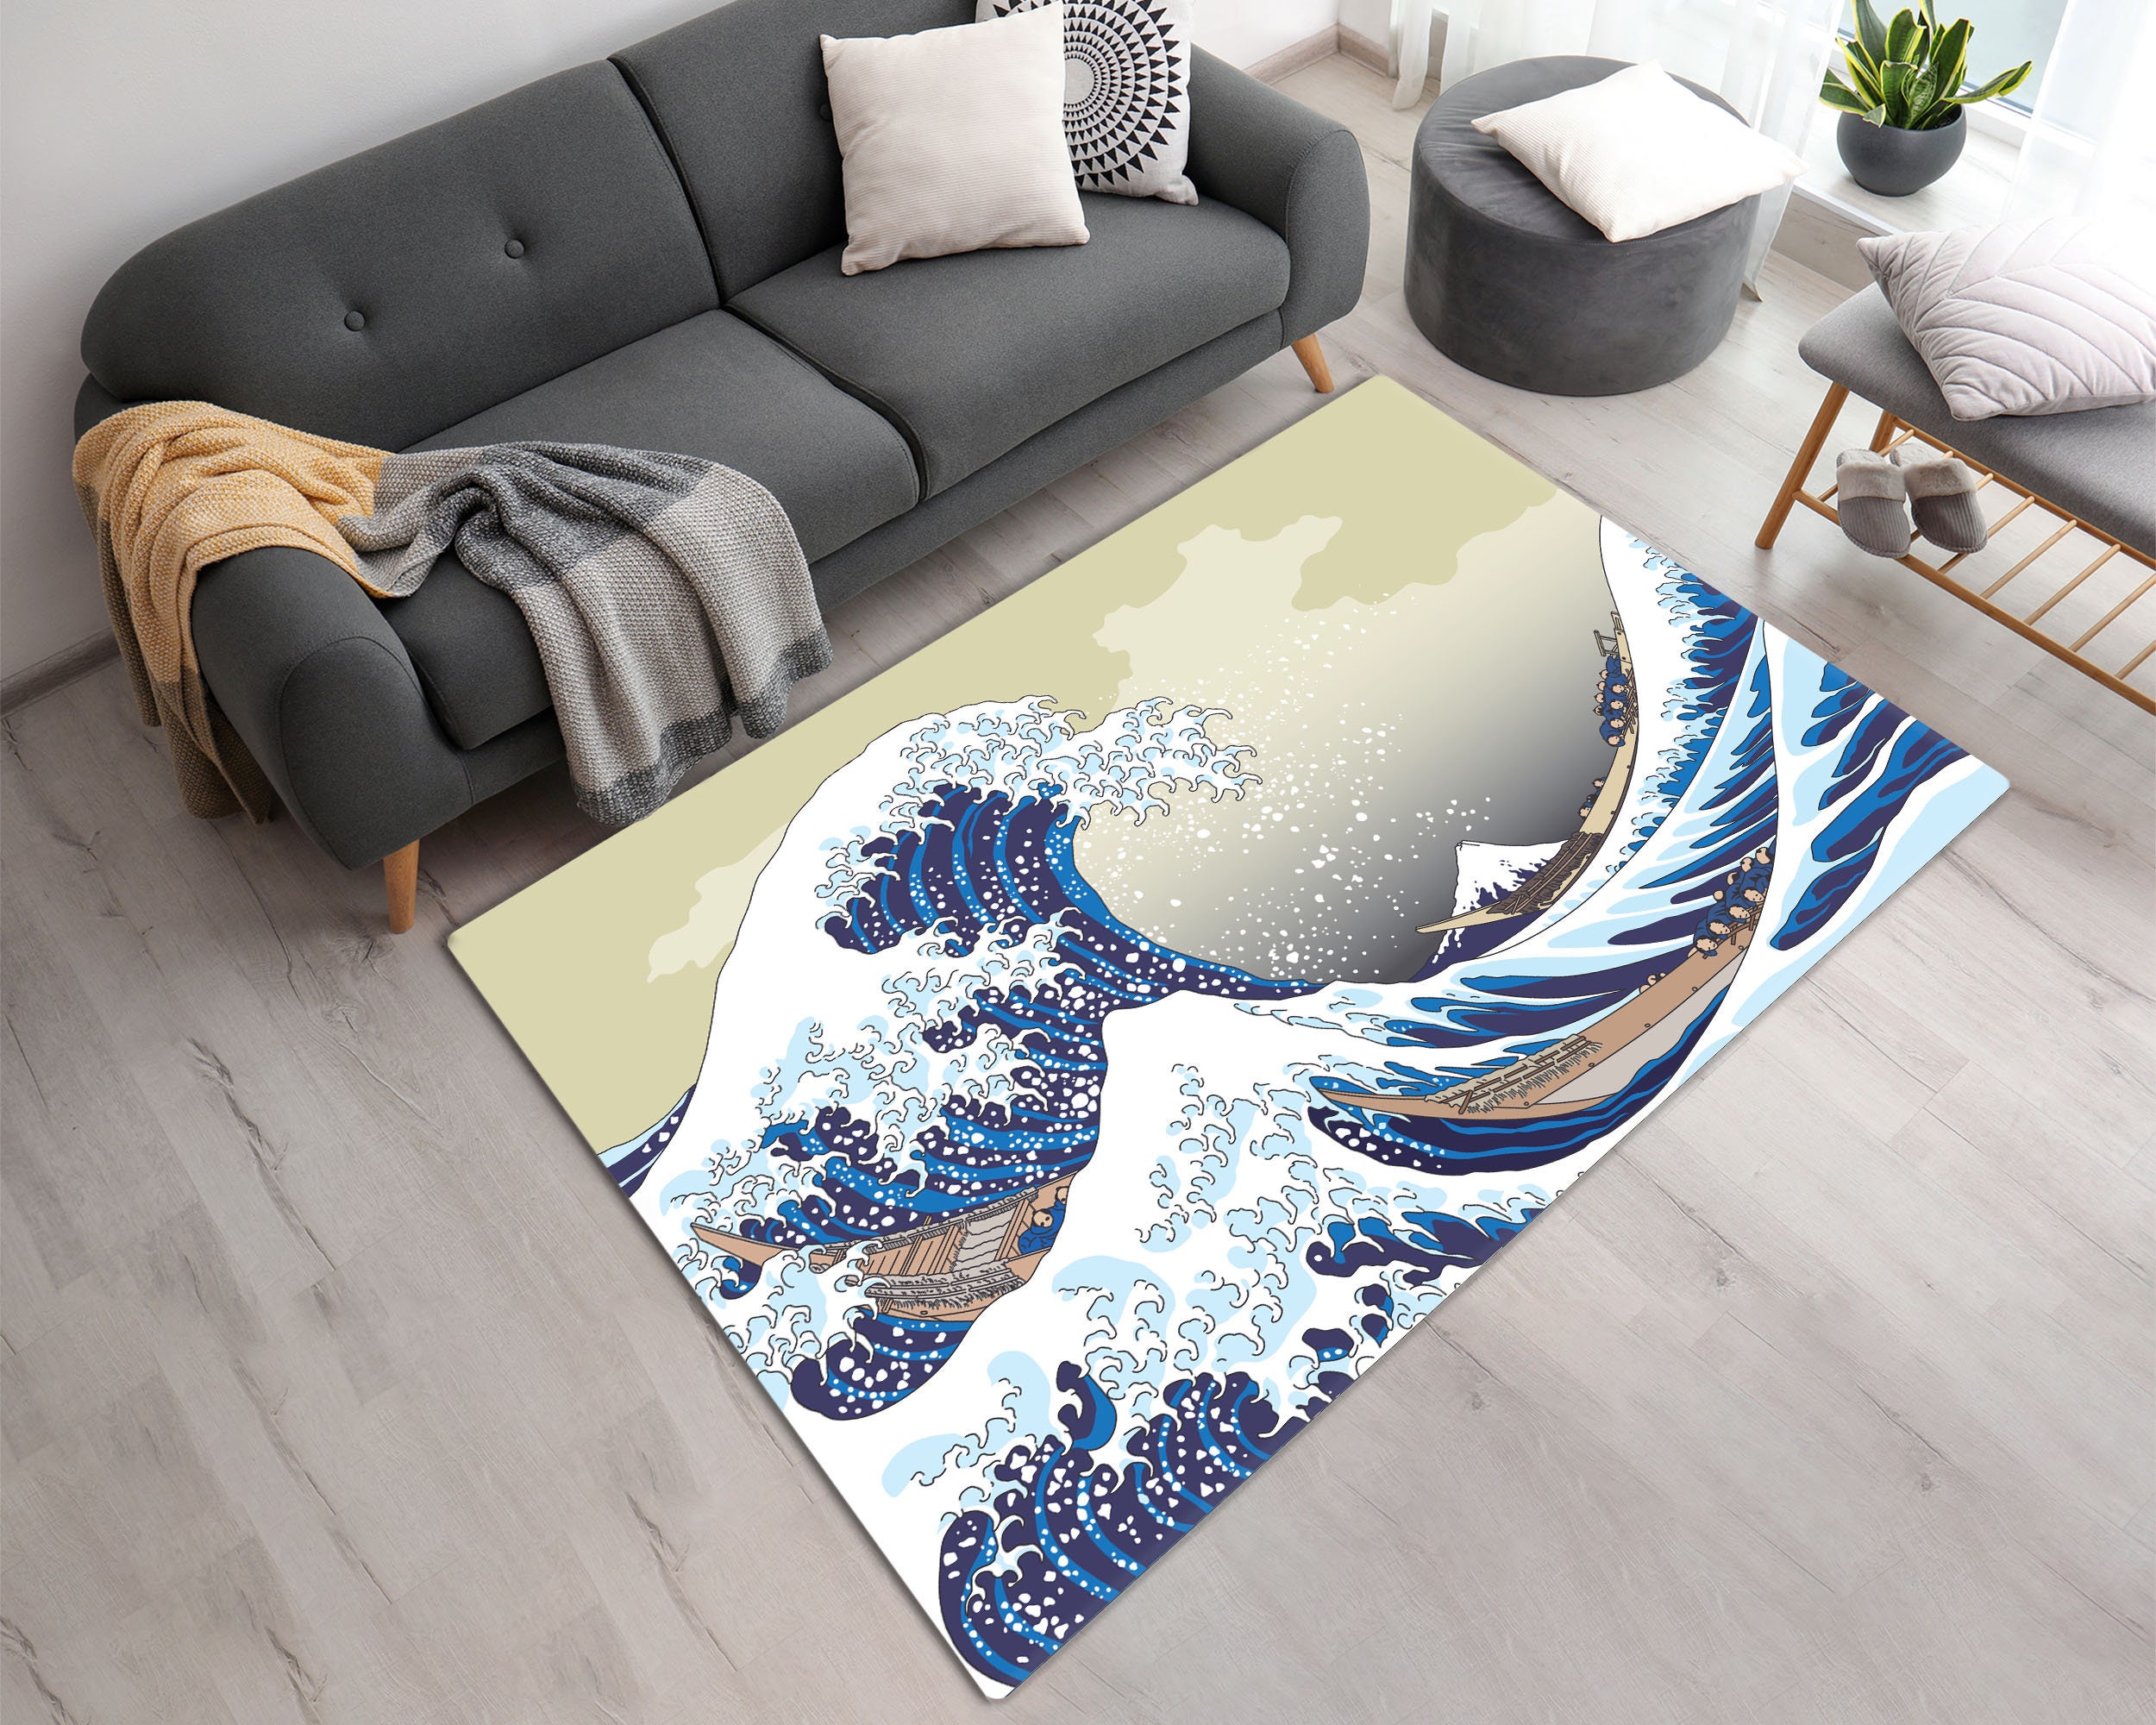 The Great Wave off Kanagawa Printed Area Rug Washable Printed Area Rug Gift  for Home Home Decor 